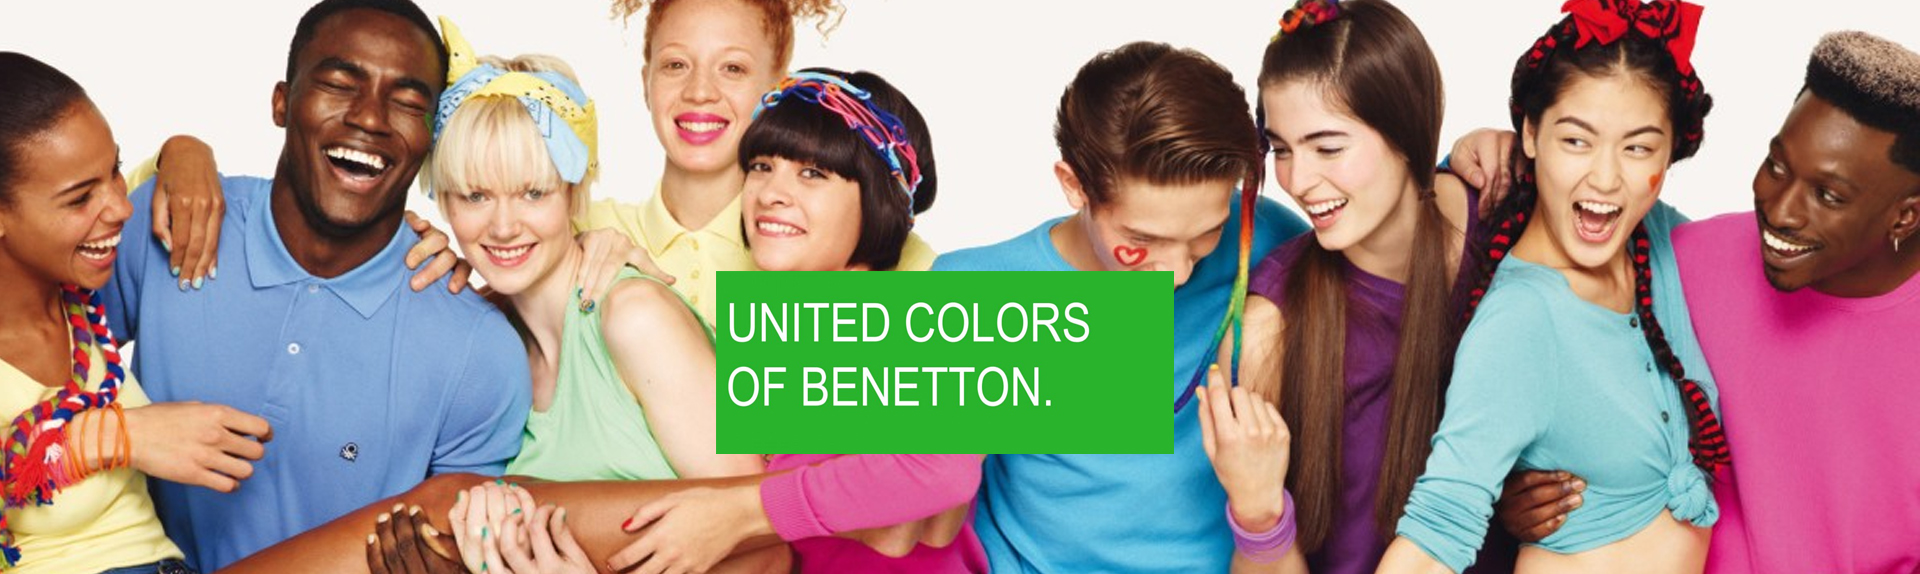 Live united colors. Benetton реклама. Рекламные кампании Benetton. Бенеттон баннер. Реклама Юнайтед Колорс оф Бенеттон.